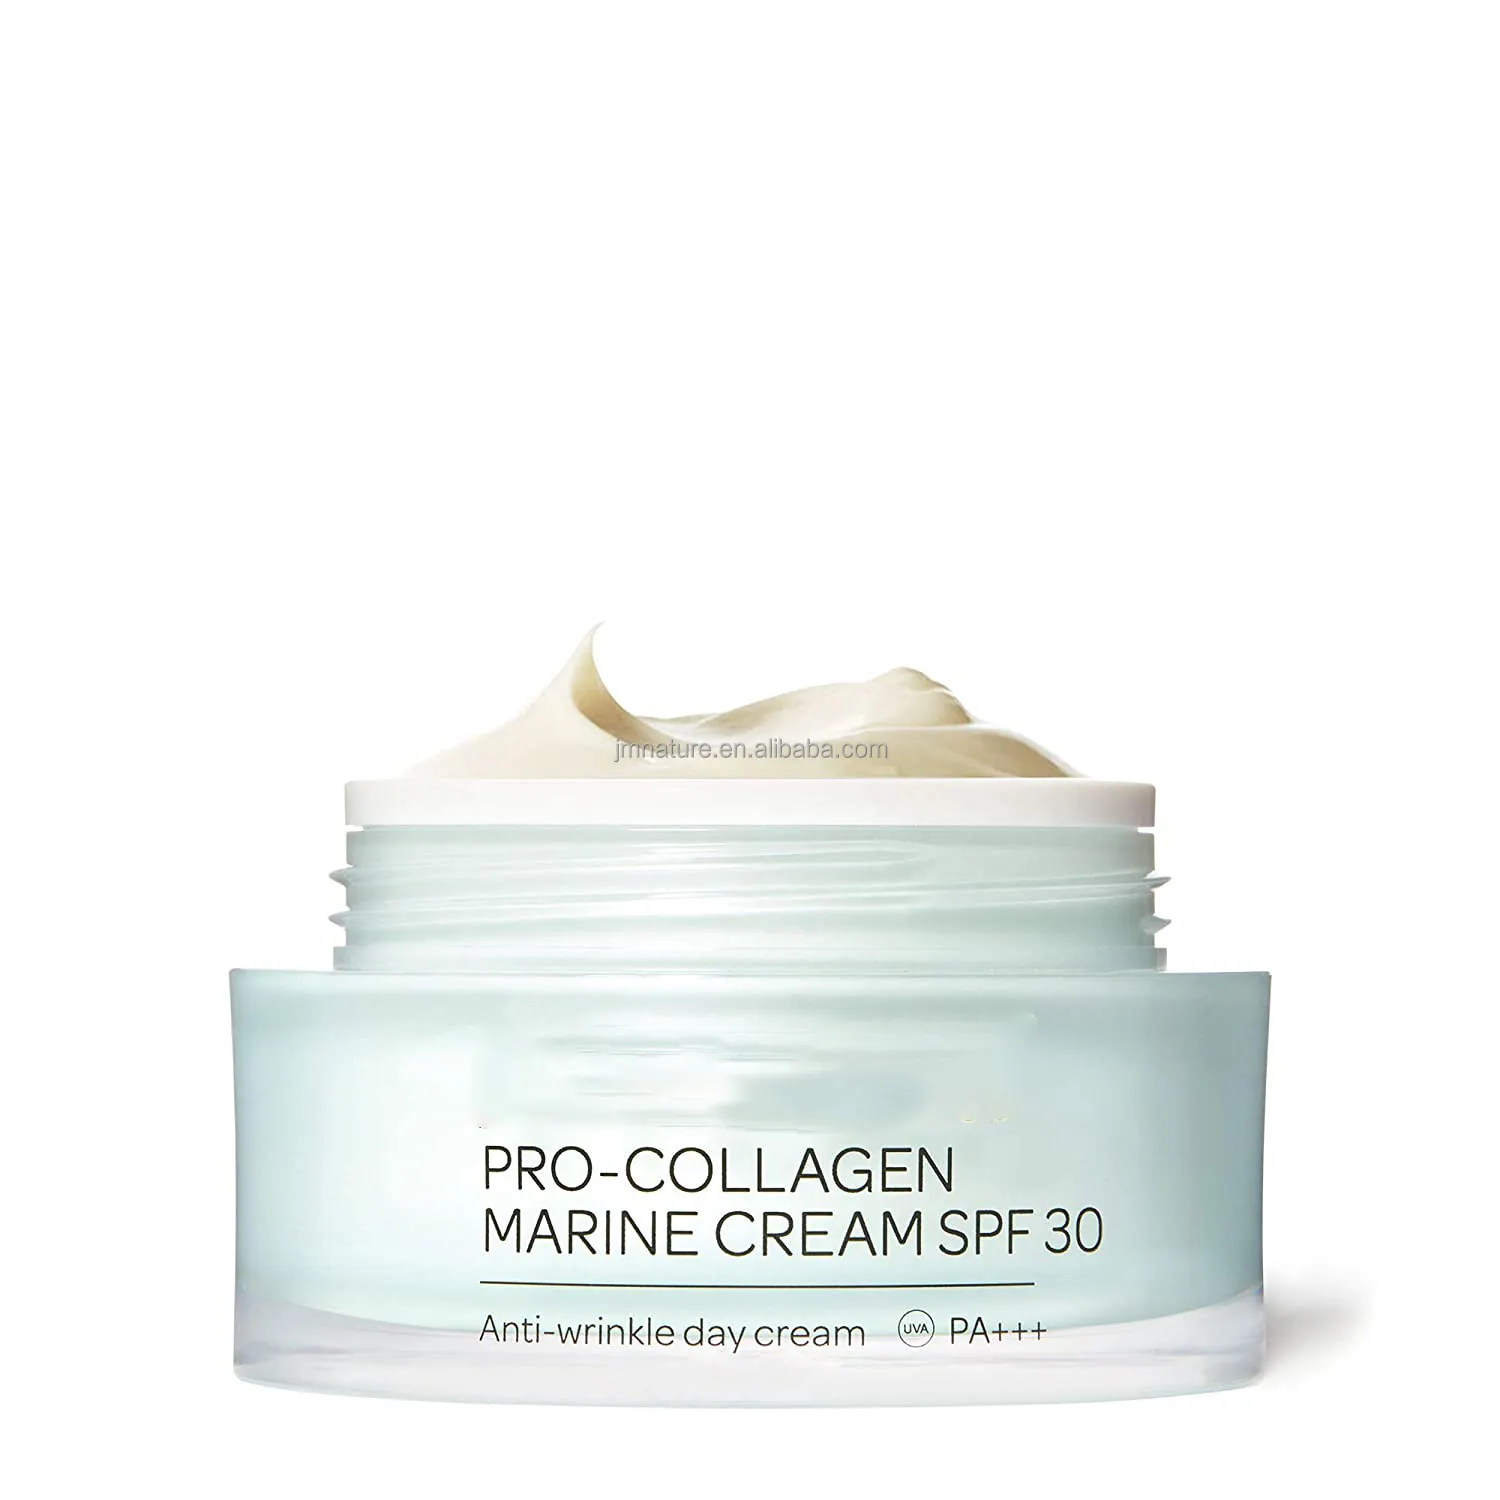 Private label Collagen Marine Cream SPF 30 Lightweight Anti-Wrinkle Daily Face Moisturizer